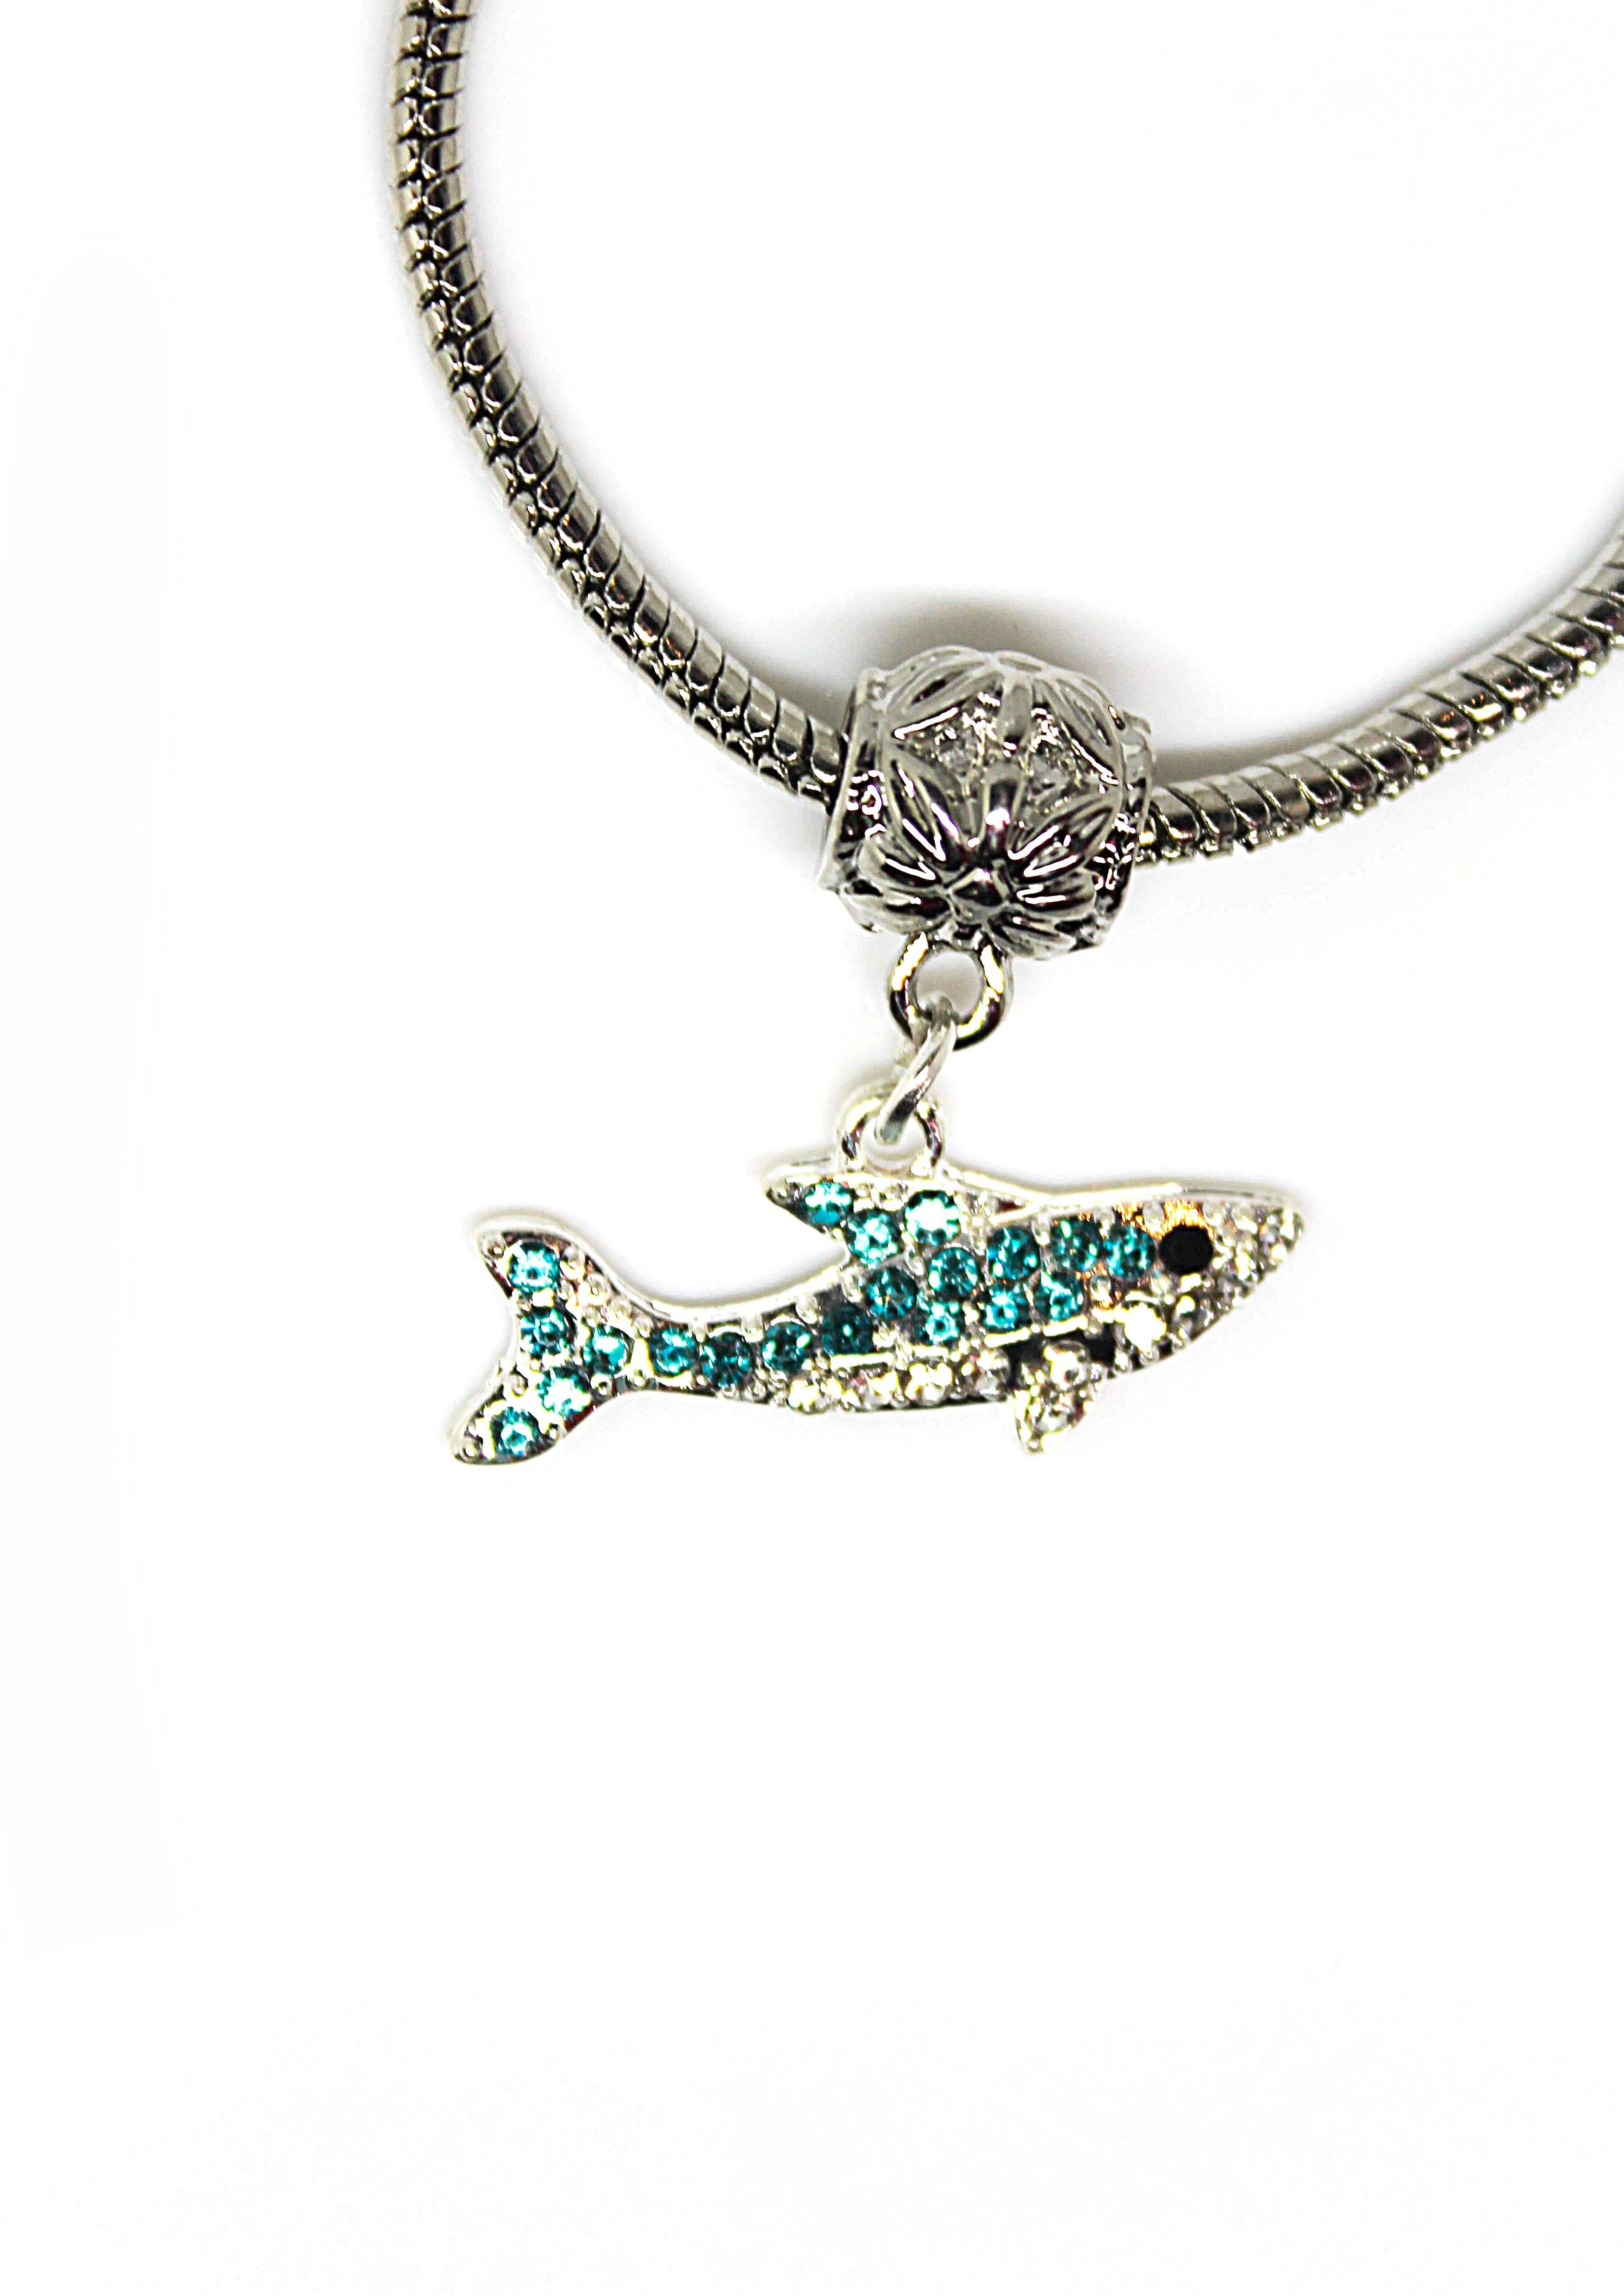 Shark Blue Charm Bracelet - Wildtouch - Wildtouch